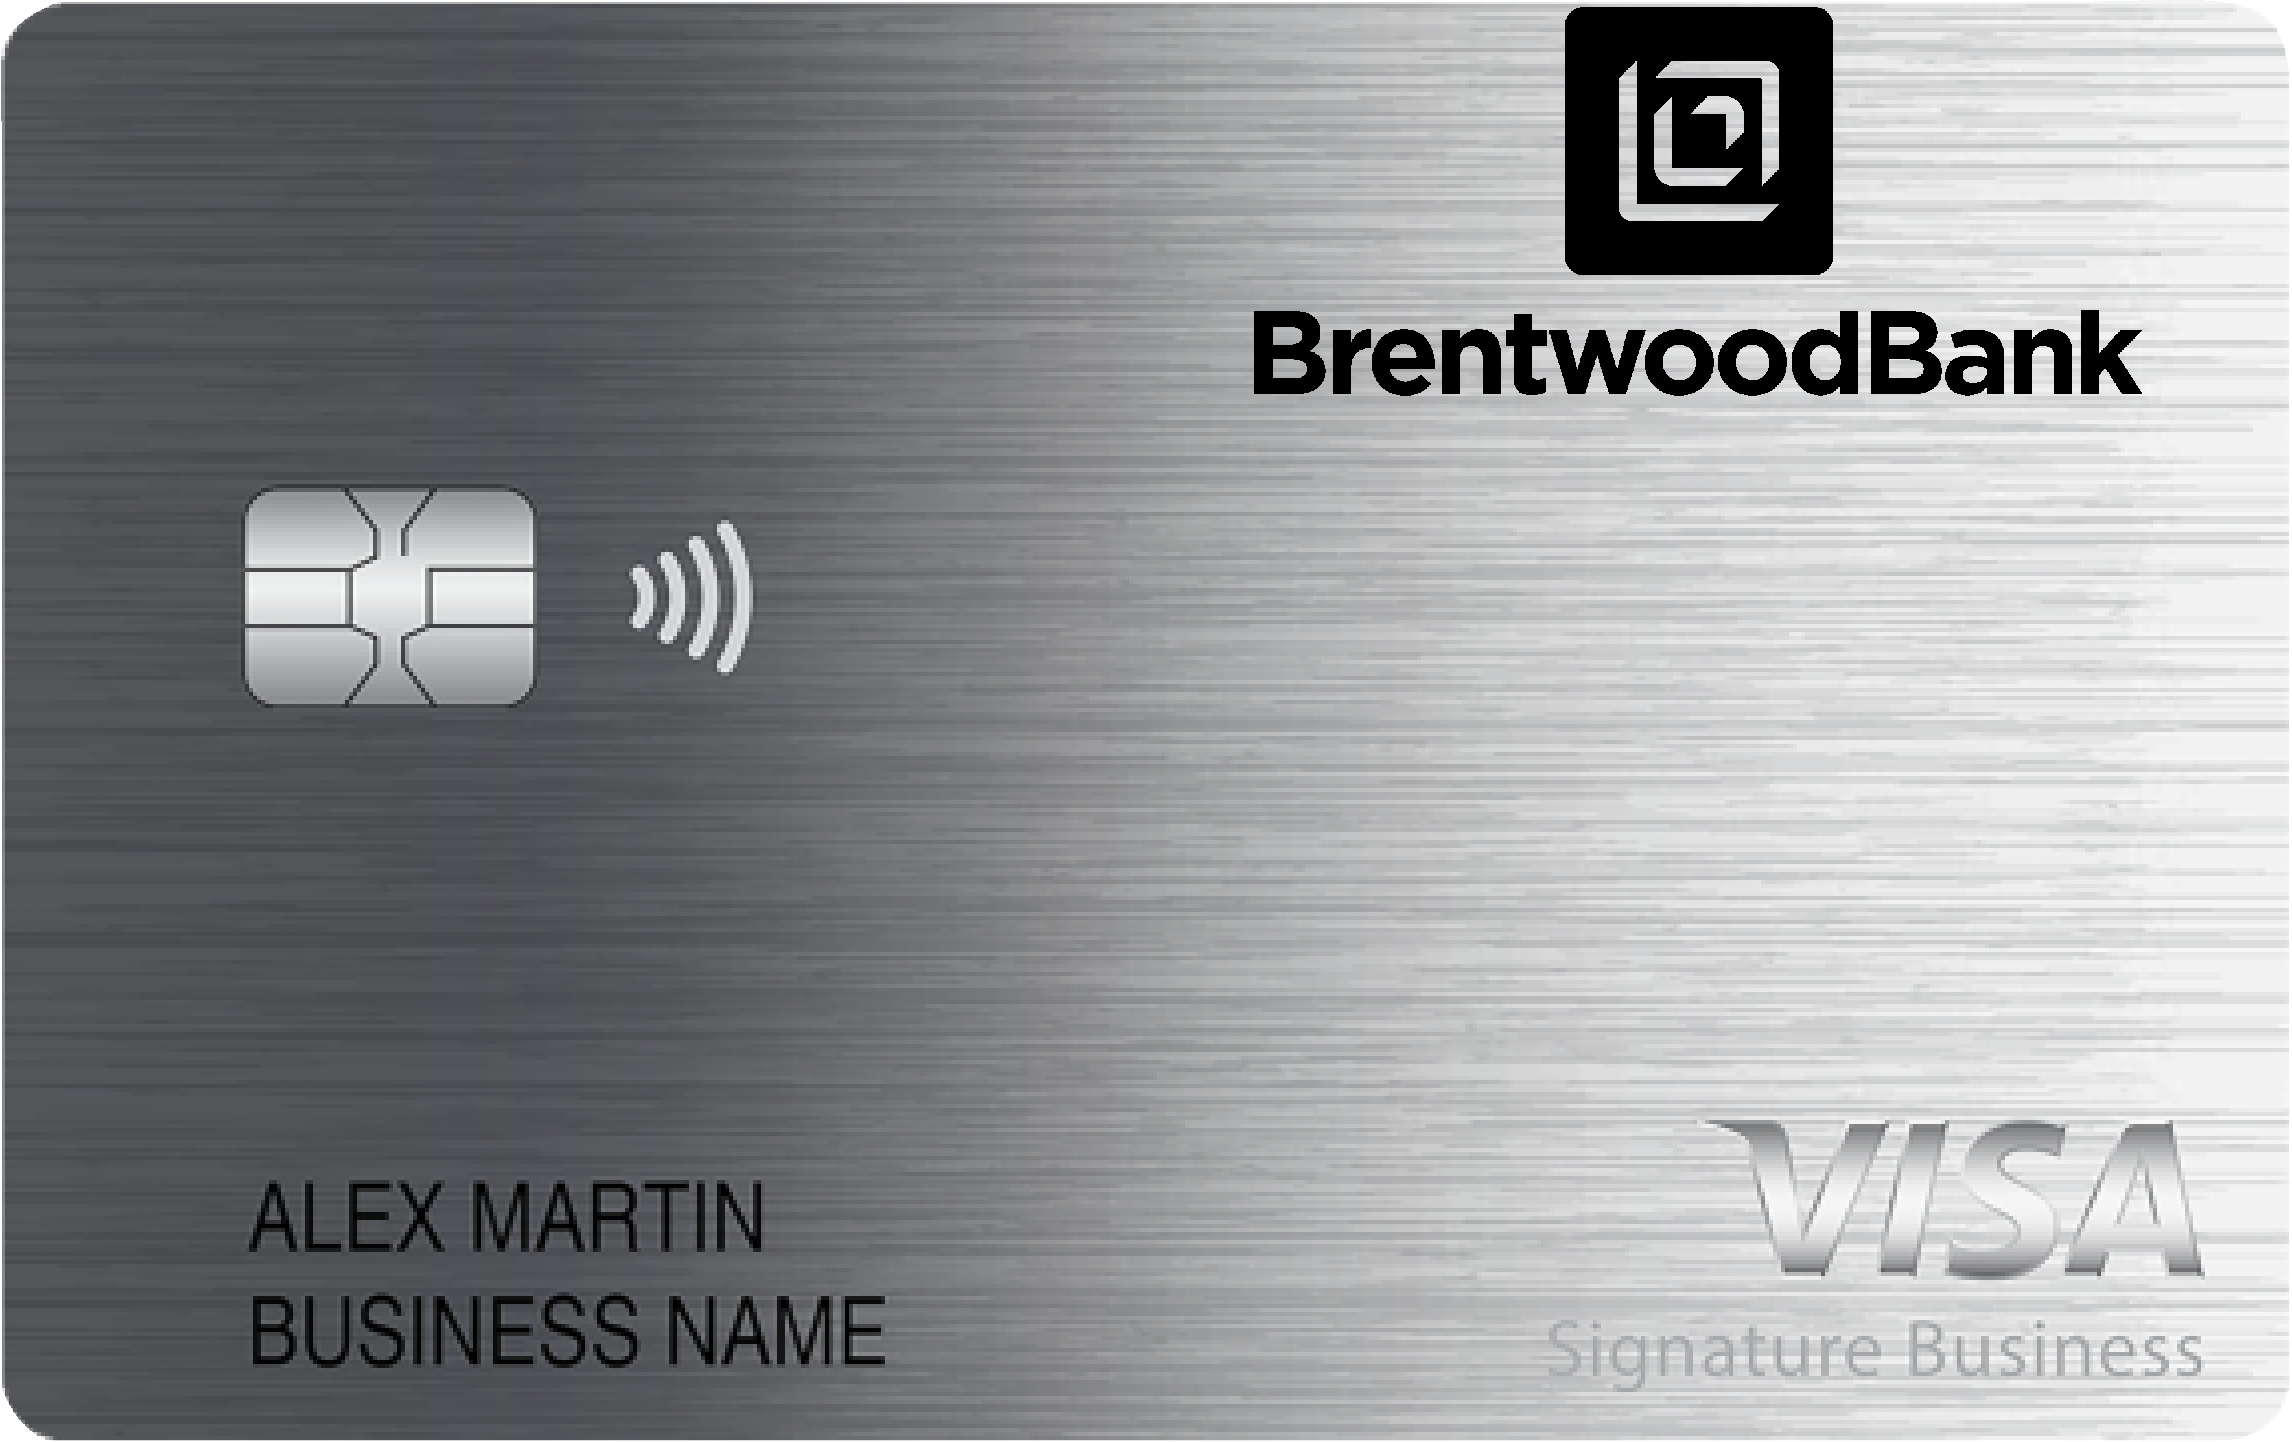 Brentwood Bank Smart Business Rewards Card